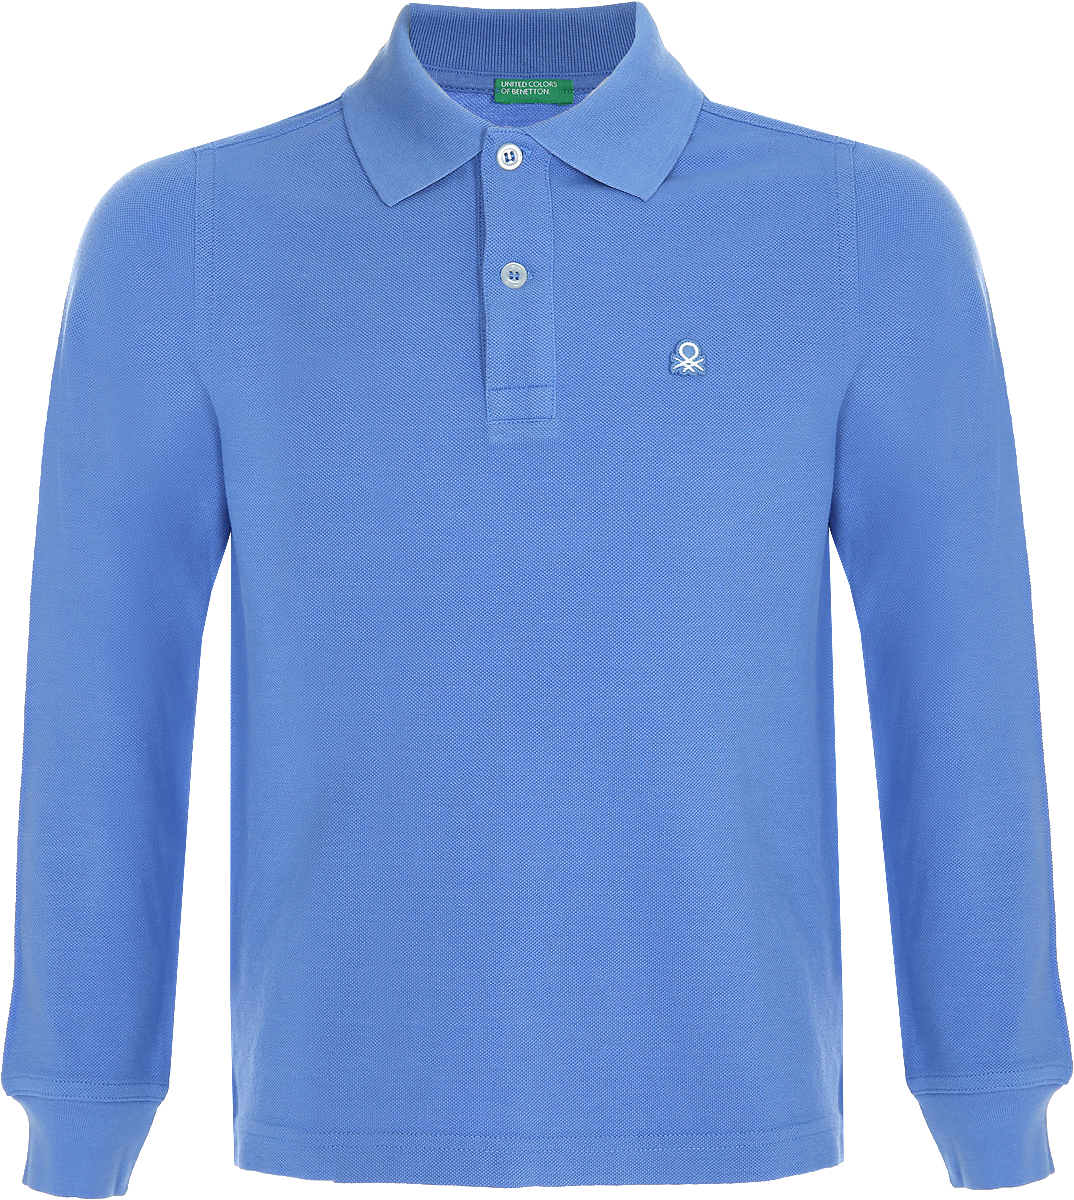 Кофта для мальчика United Colors of Benetton, цвет: голубой. 3089C3090_26R. Размер 130